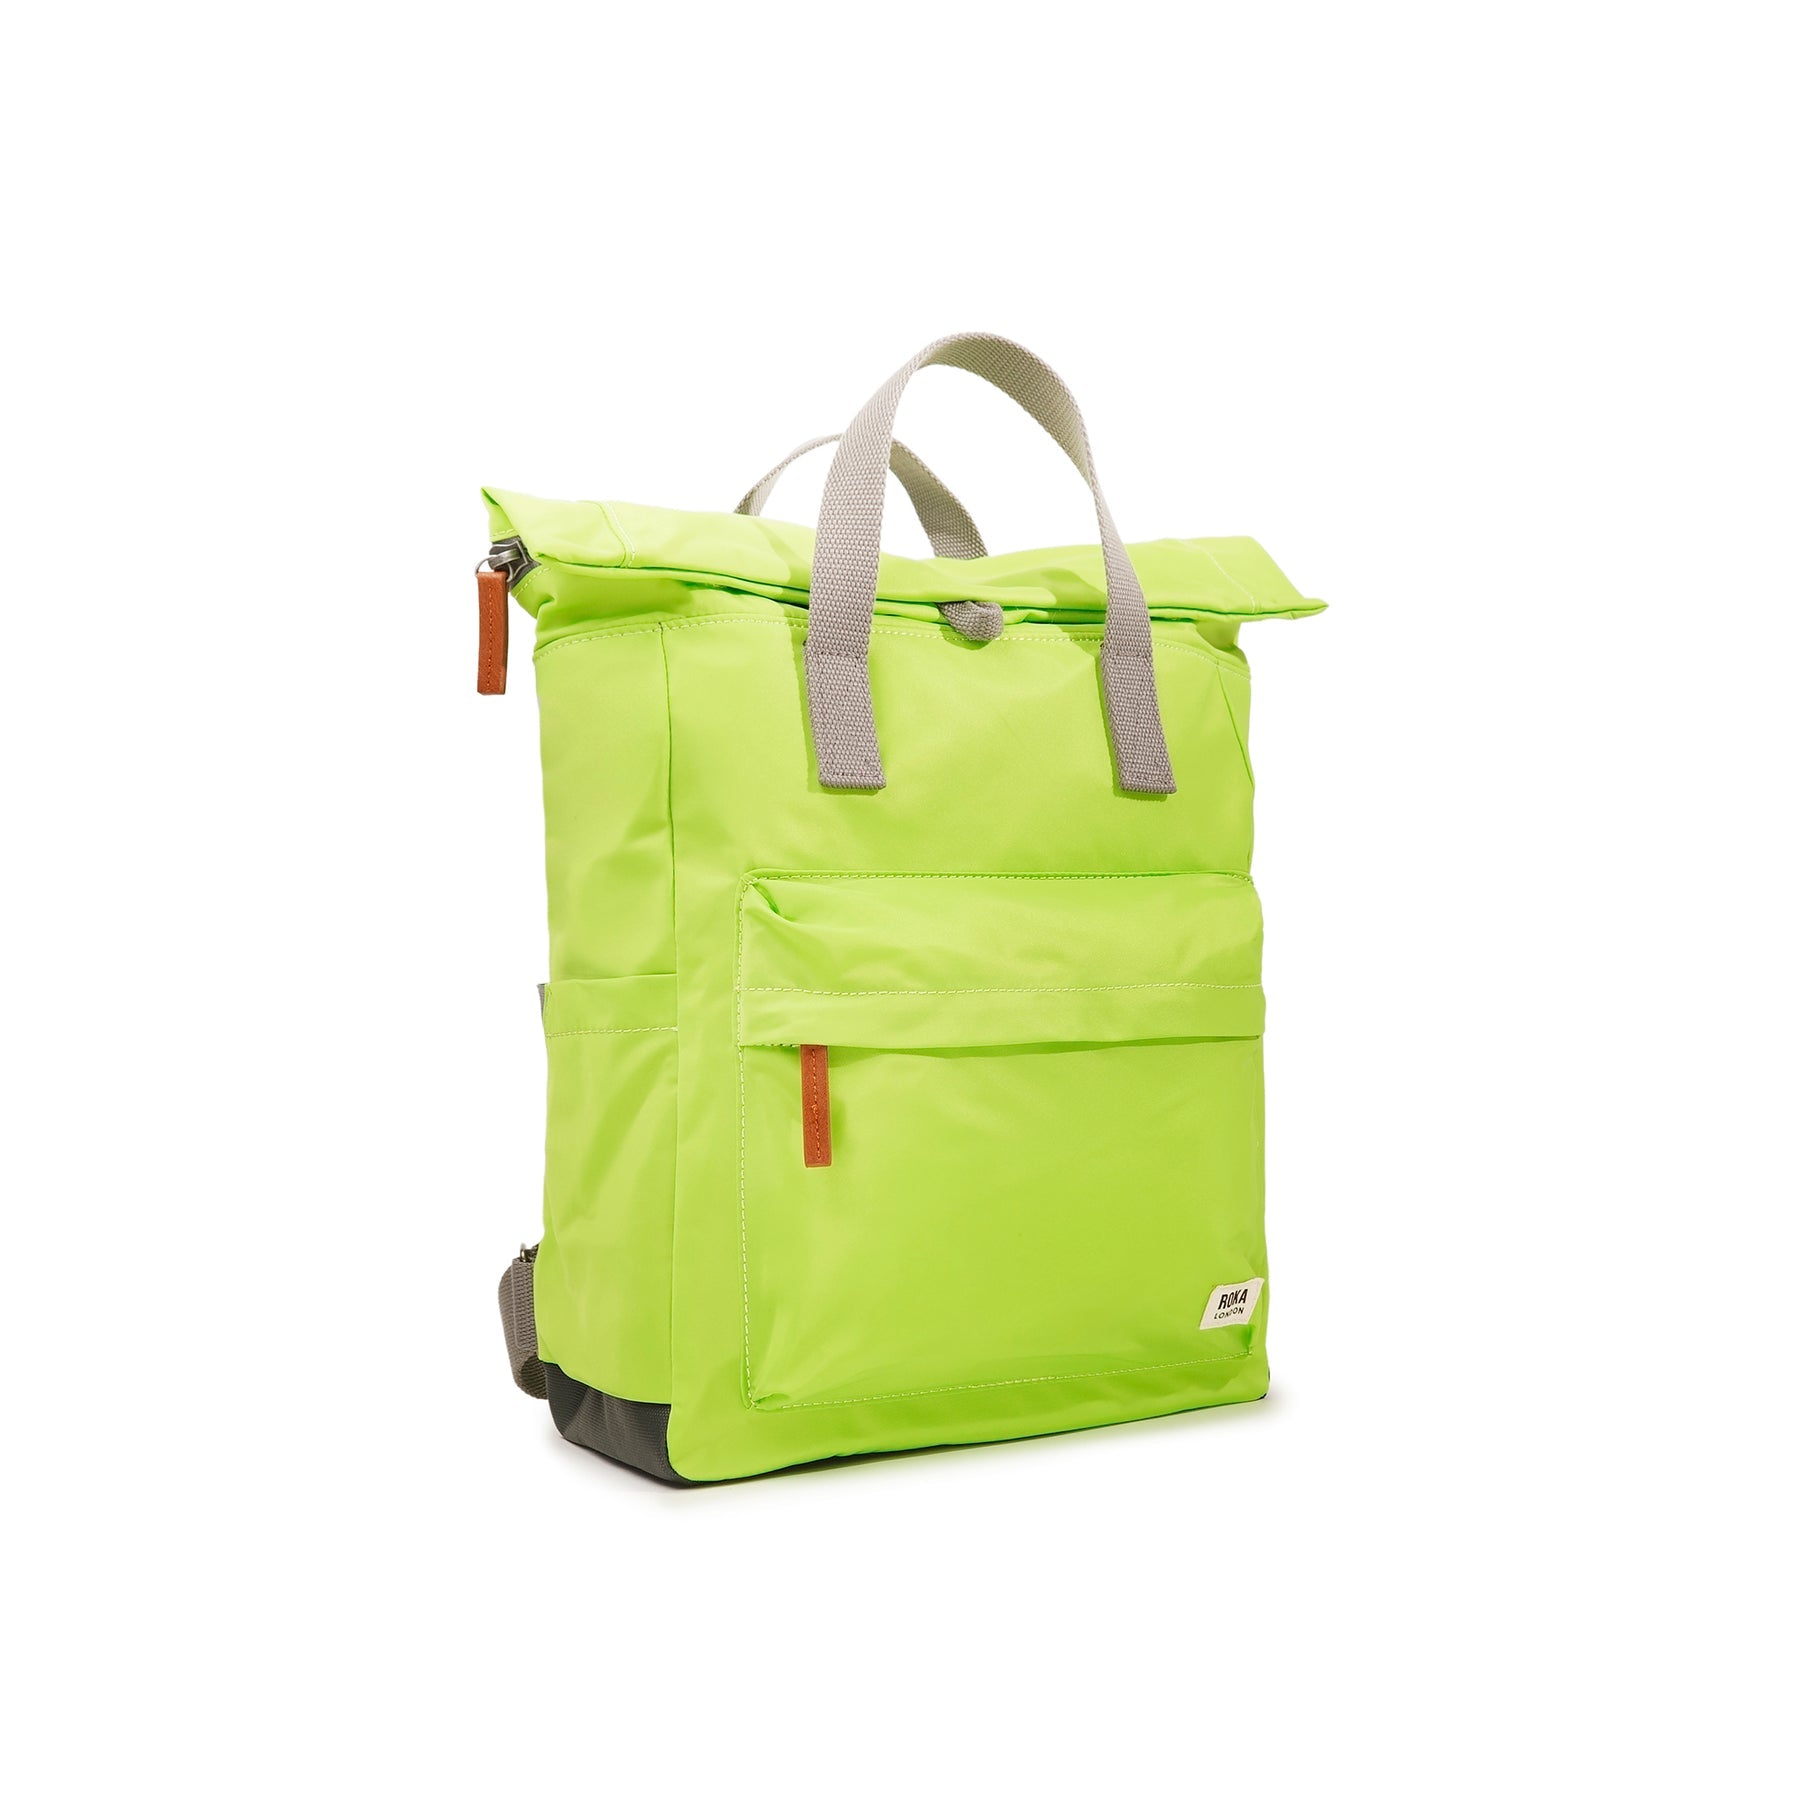 ROKA Canfield B Lime Medium Recycled Nylon Bag